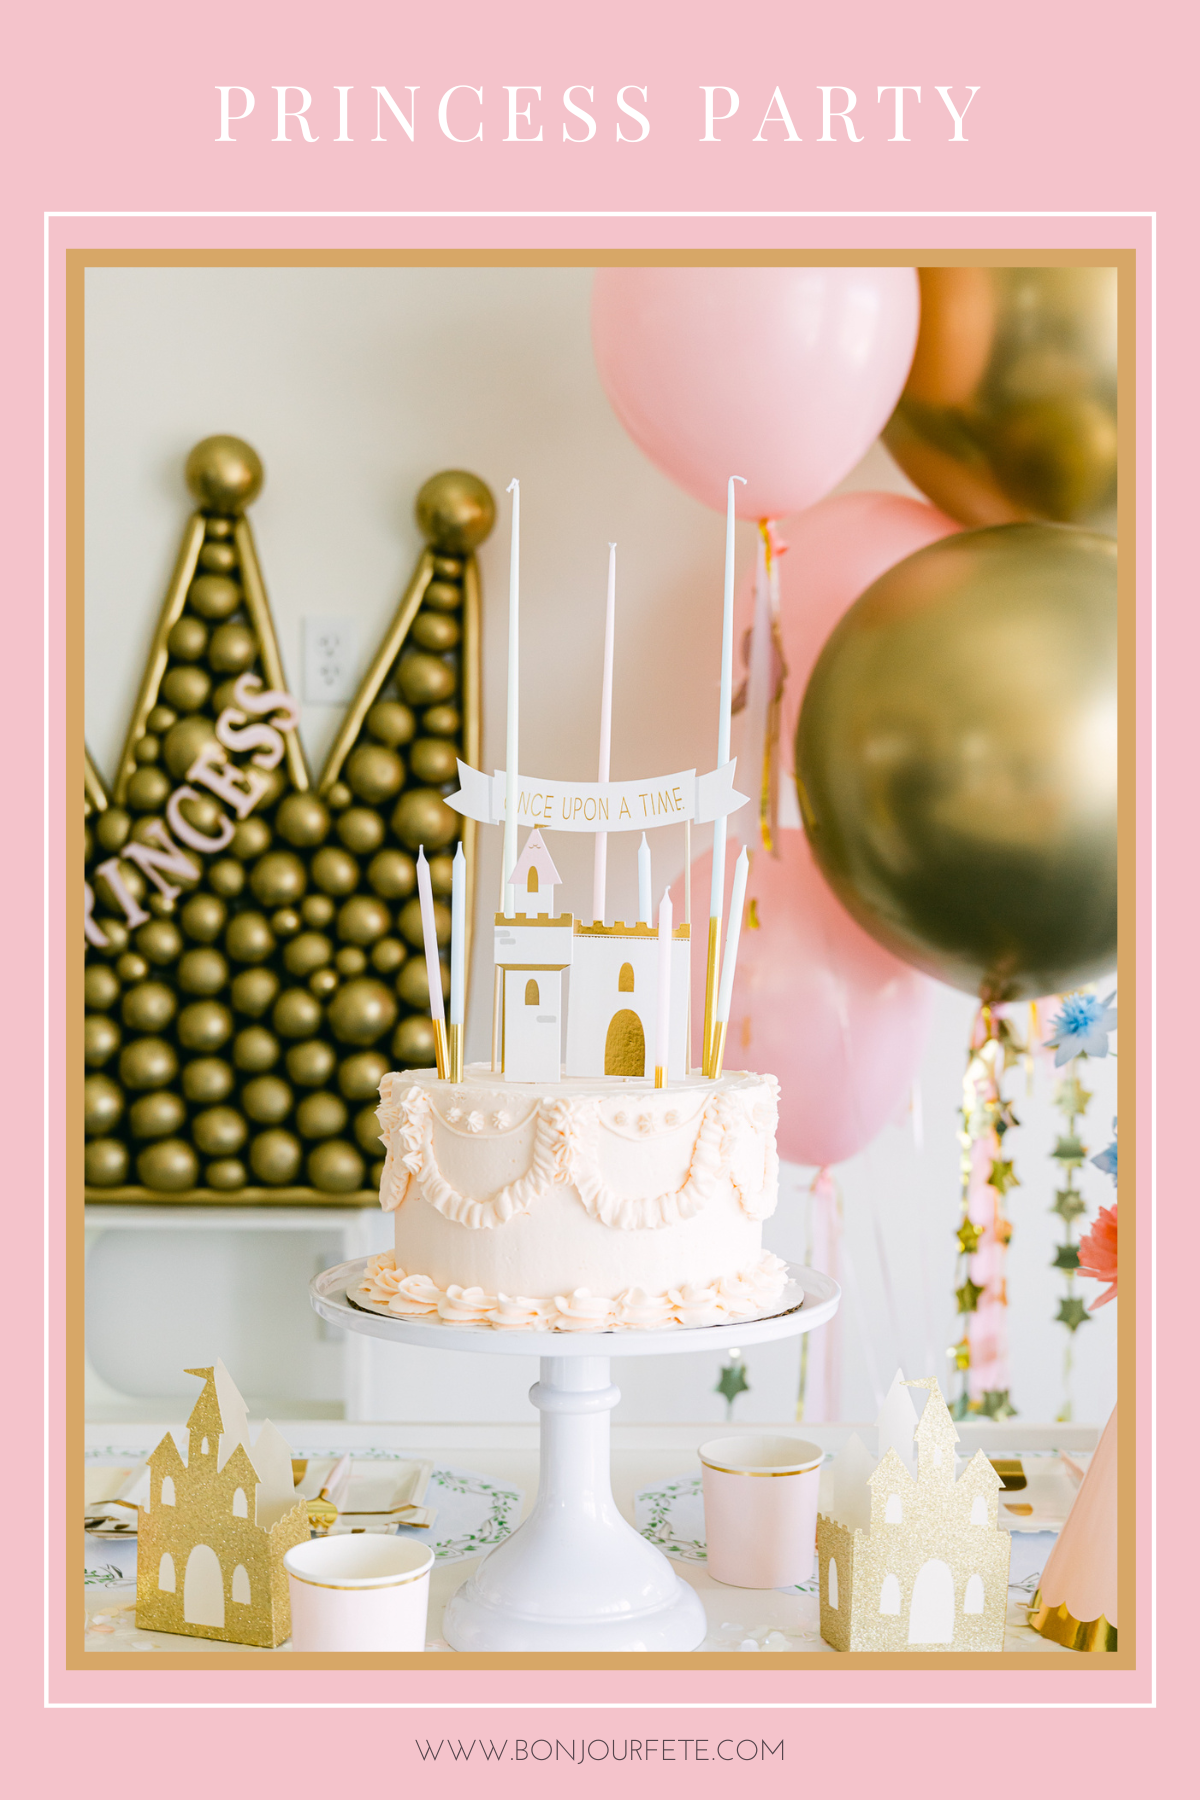 Pink Girl Bow little Princess Girl's Happy Birthday Cake Birthday  Decoration